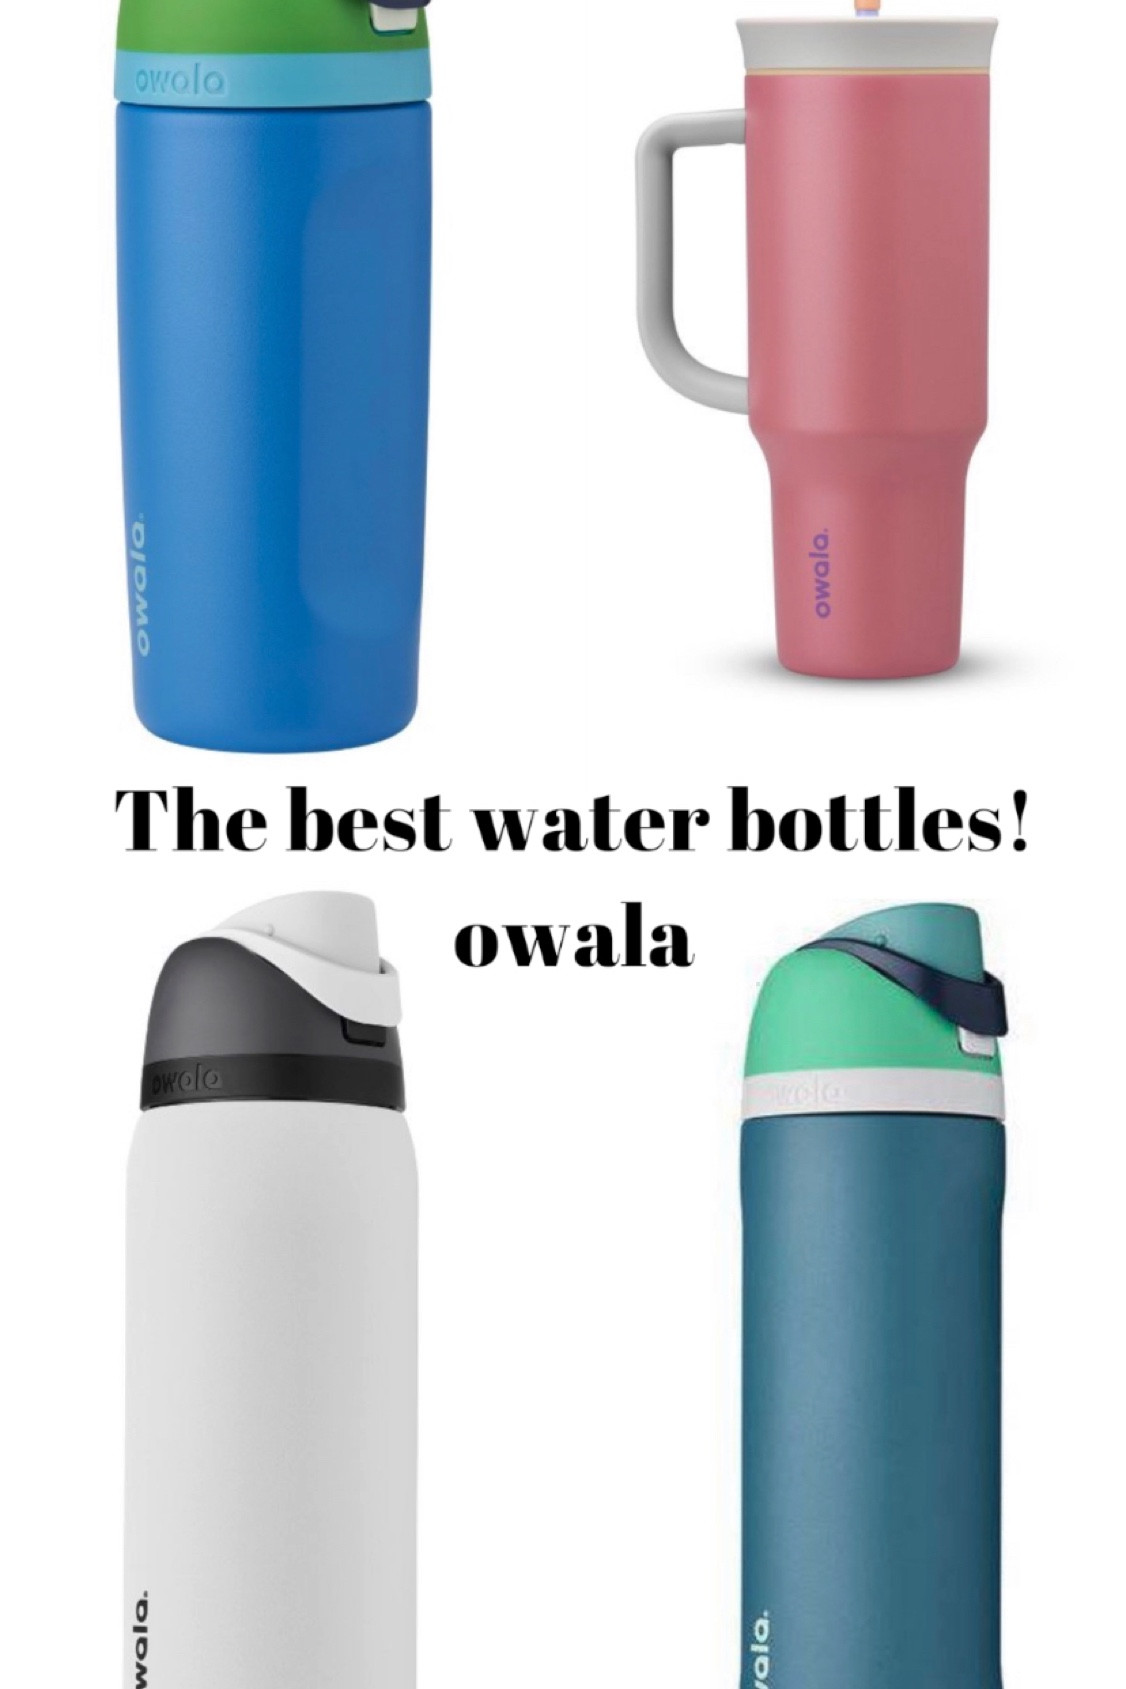 20% off Owala Water Bottles